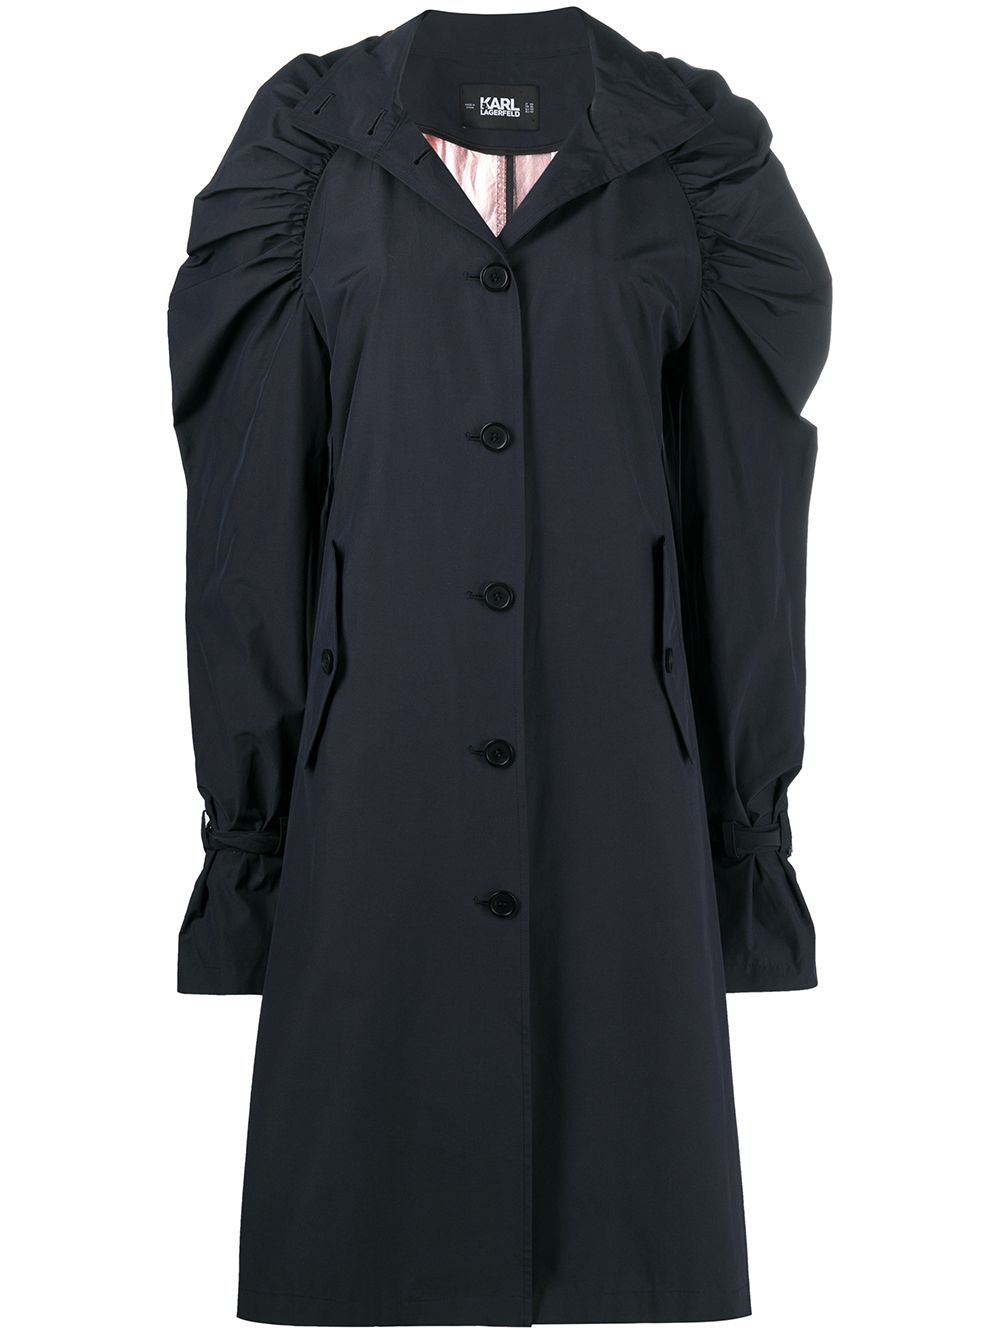 фото Karl lagerfeld пальто длины миди с пышными рукавами